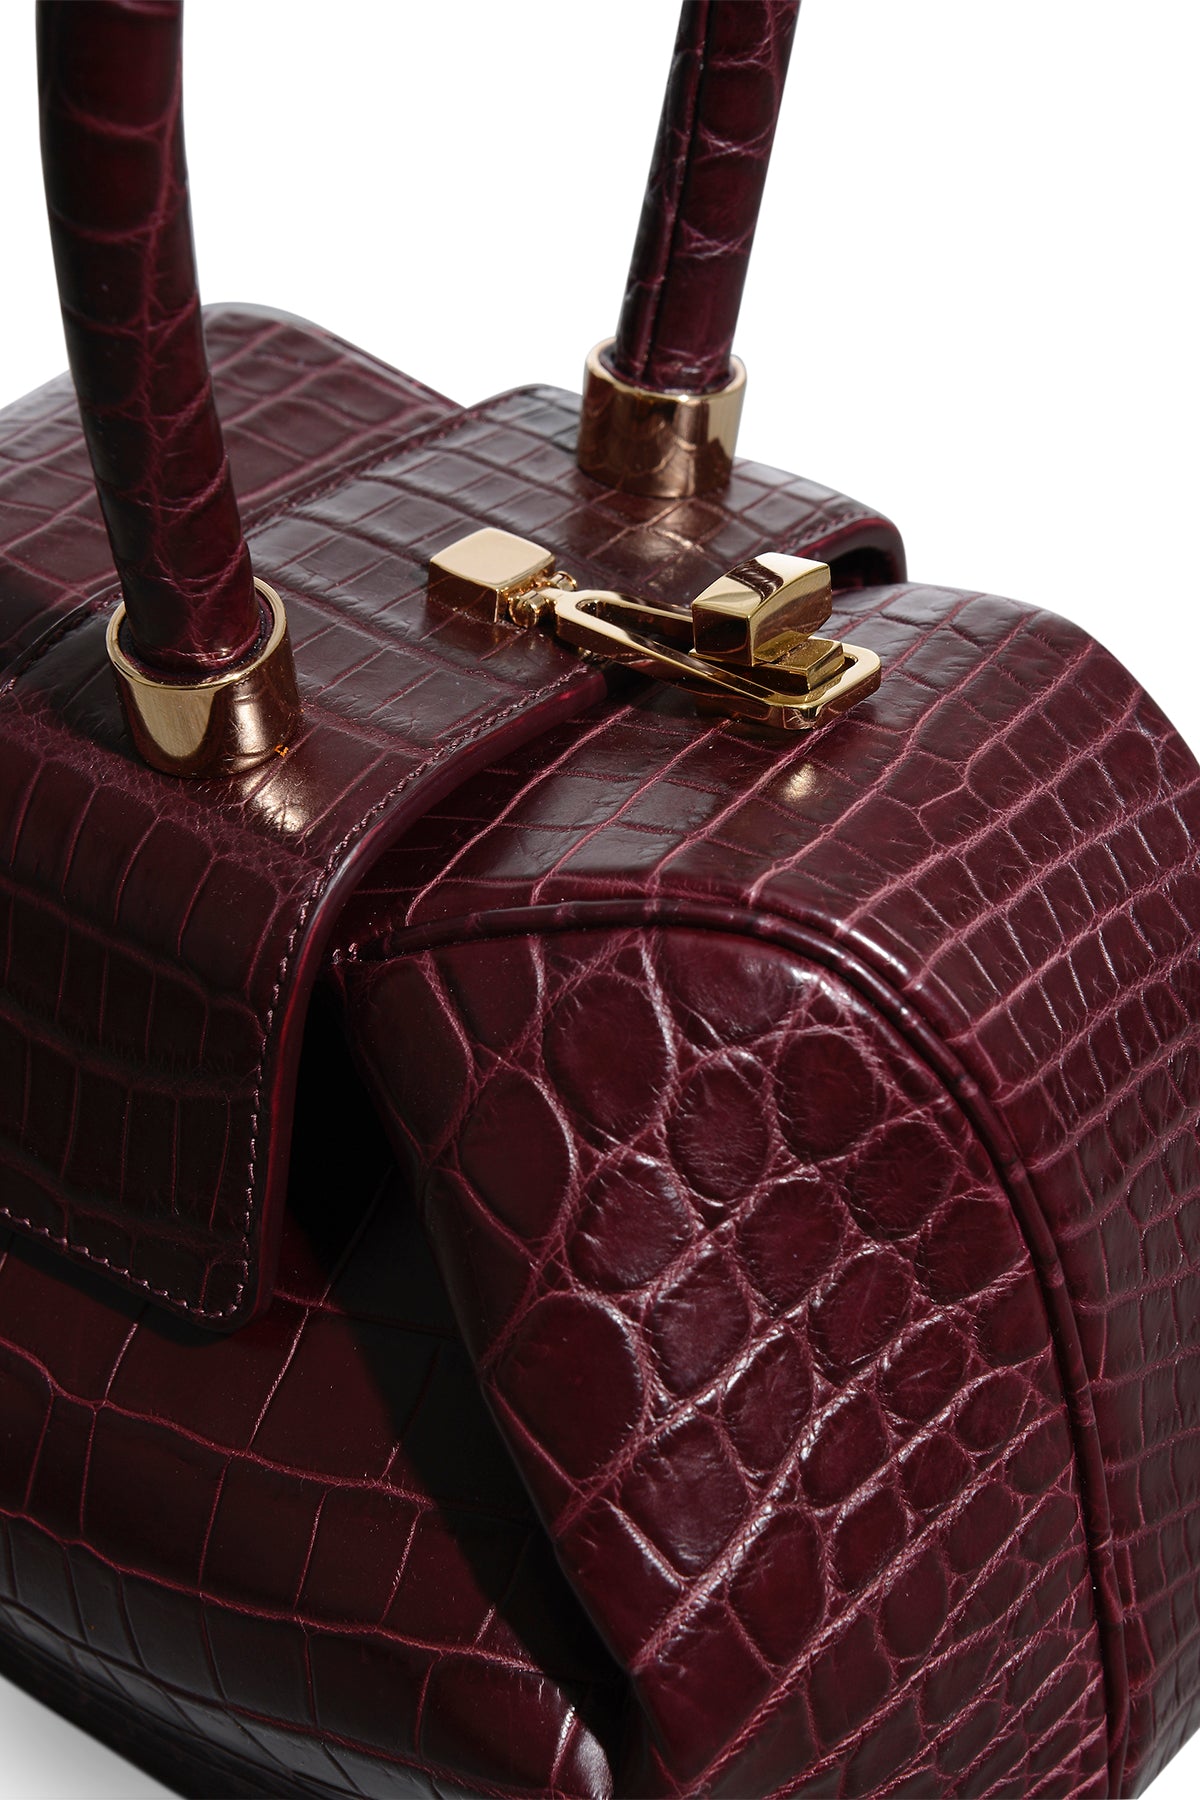 Demi Bag in Bordeaux Crocodile Leather